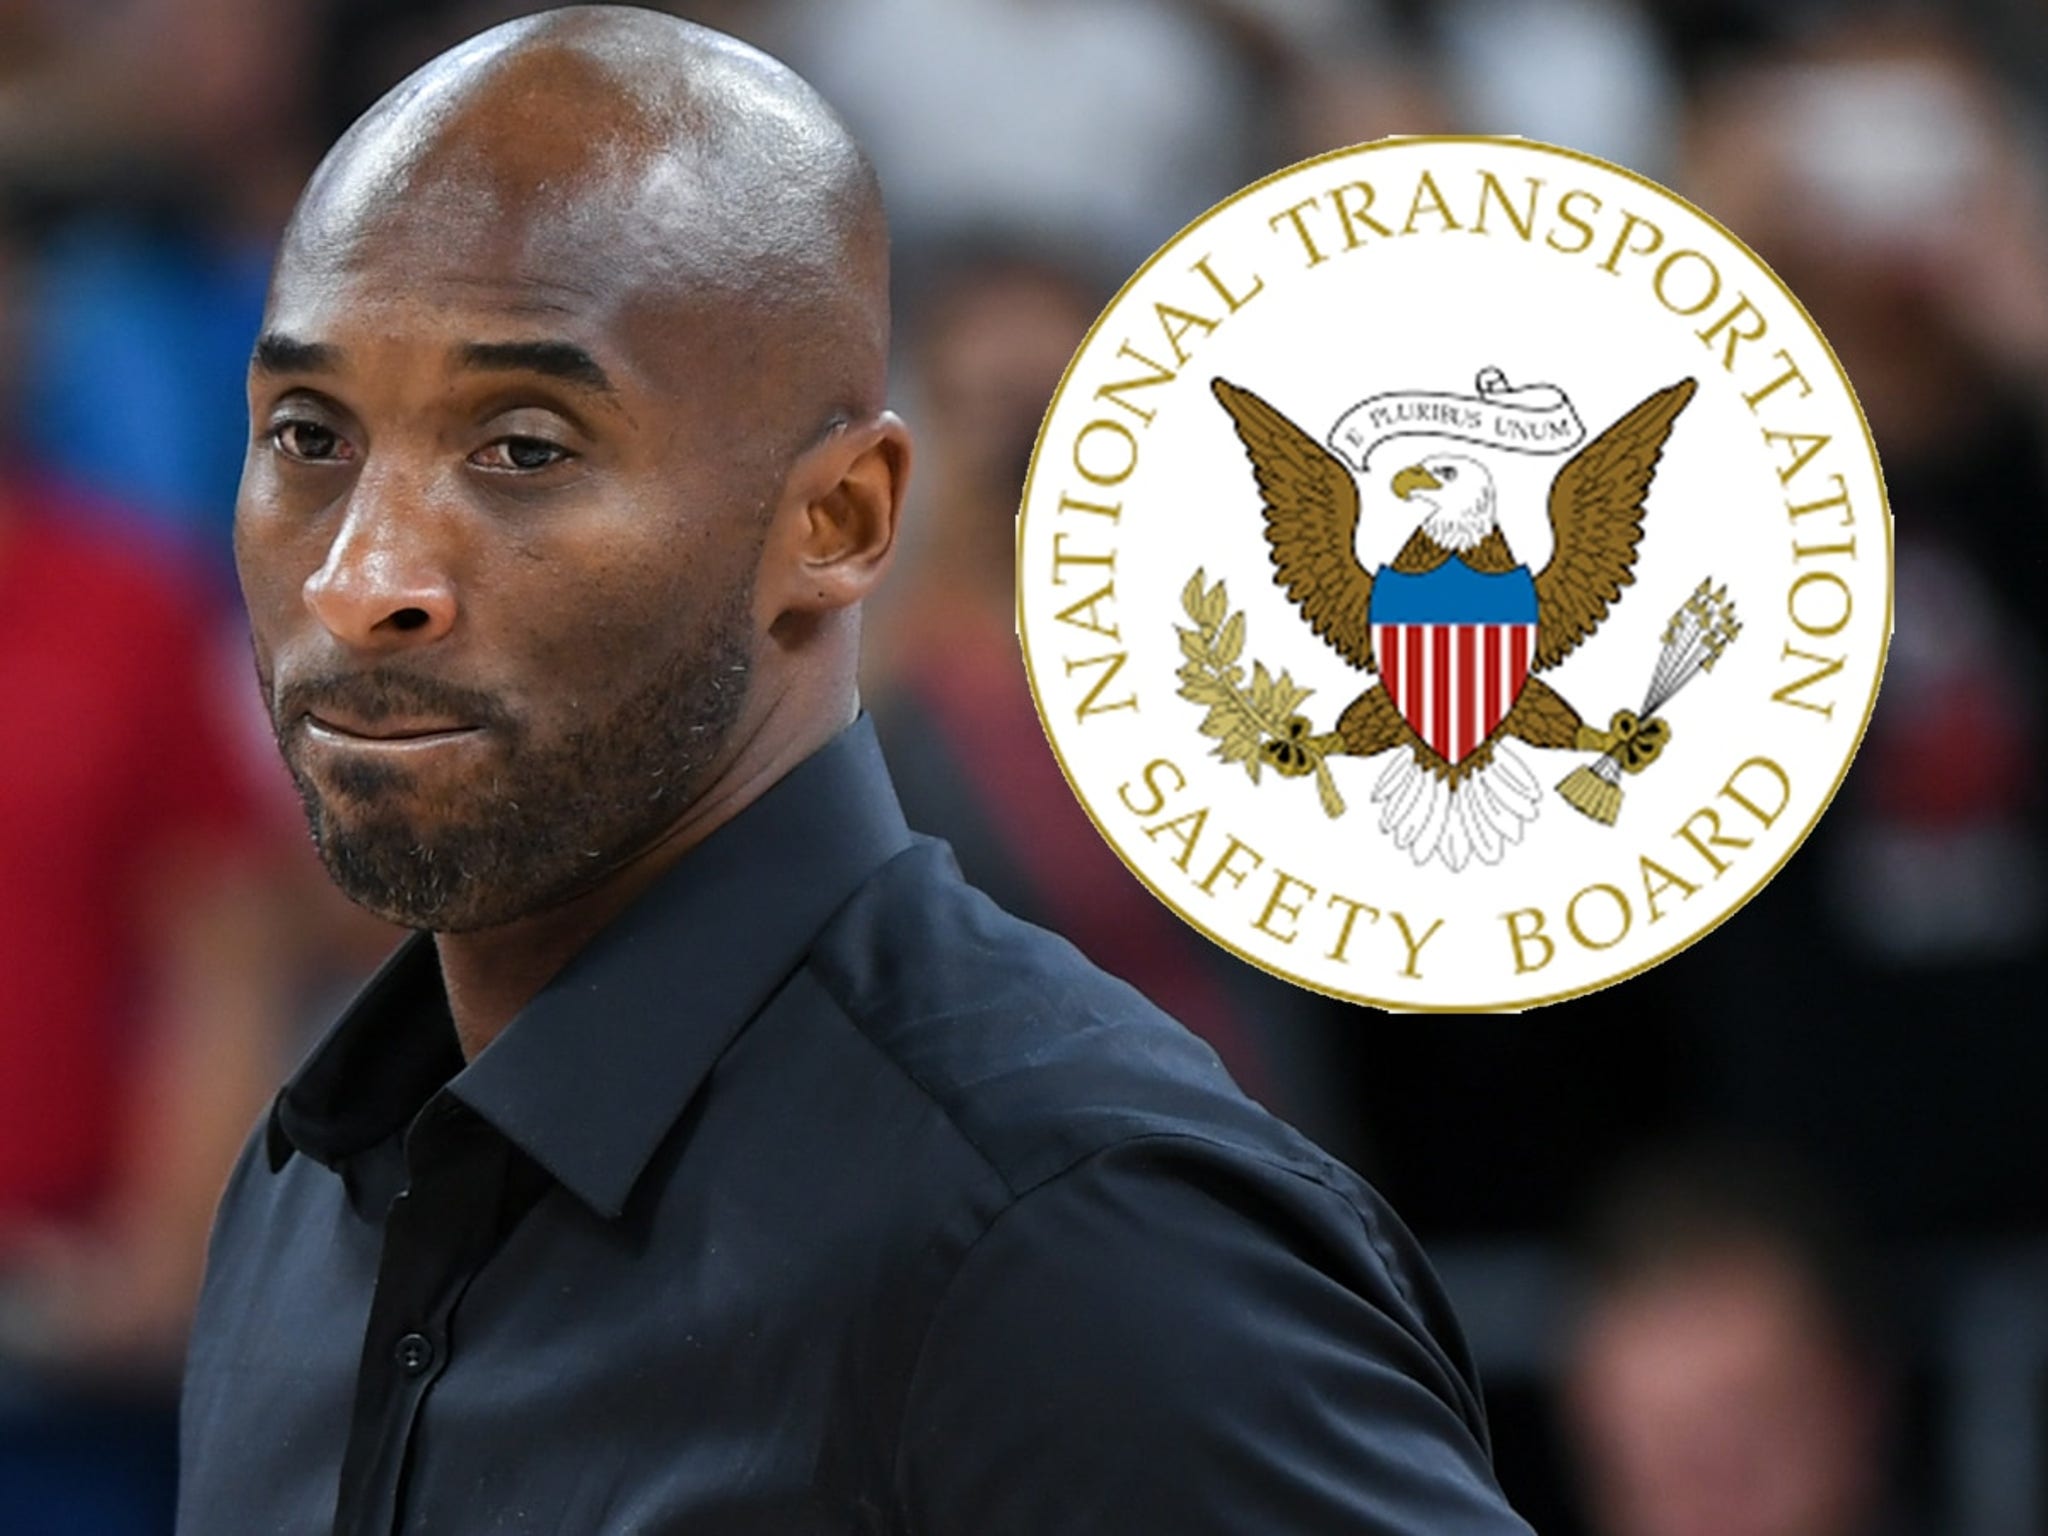 Kobe Bryant leads U.S. over stingy Russia – Boston Herald